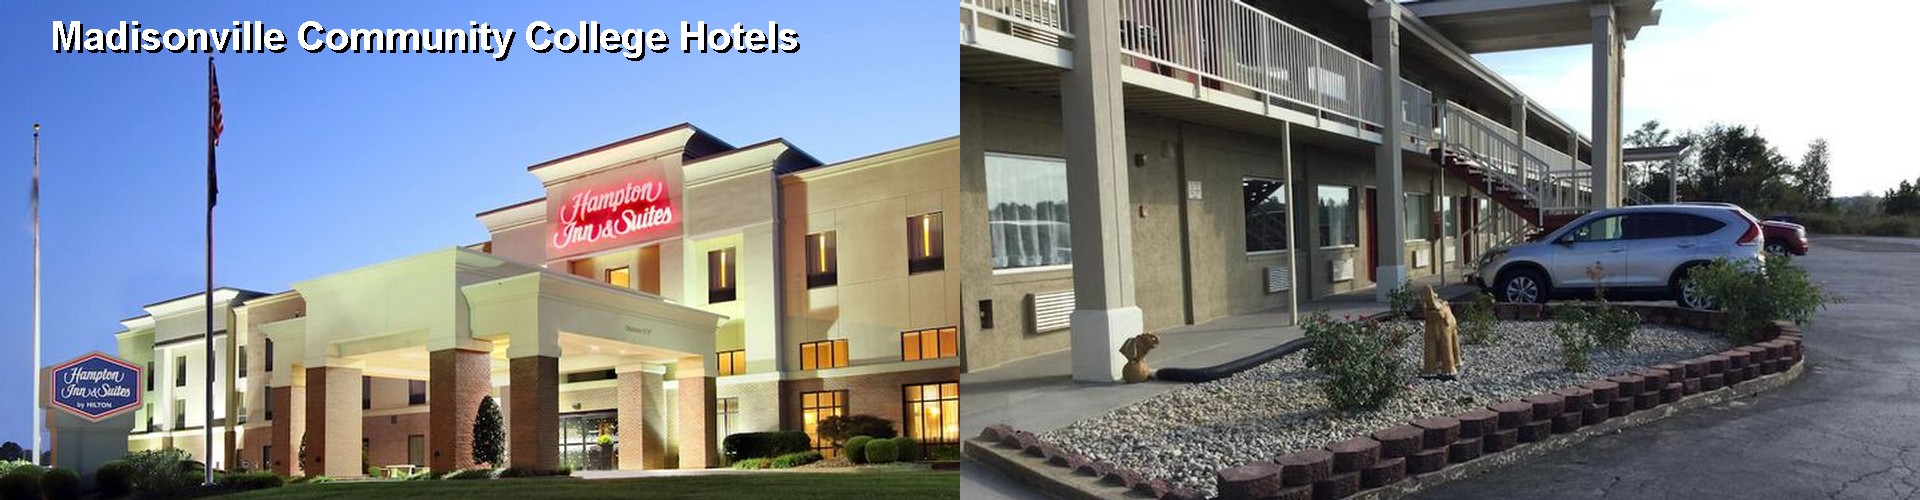 4 Best Hotels near Madisonville Community College